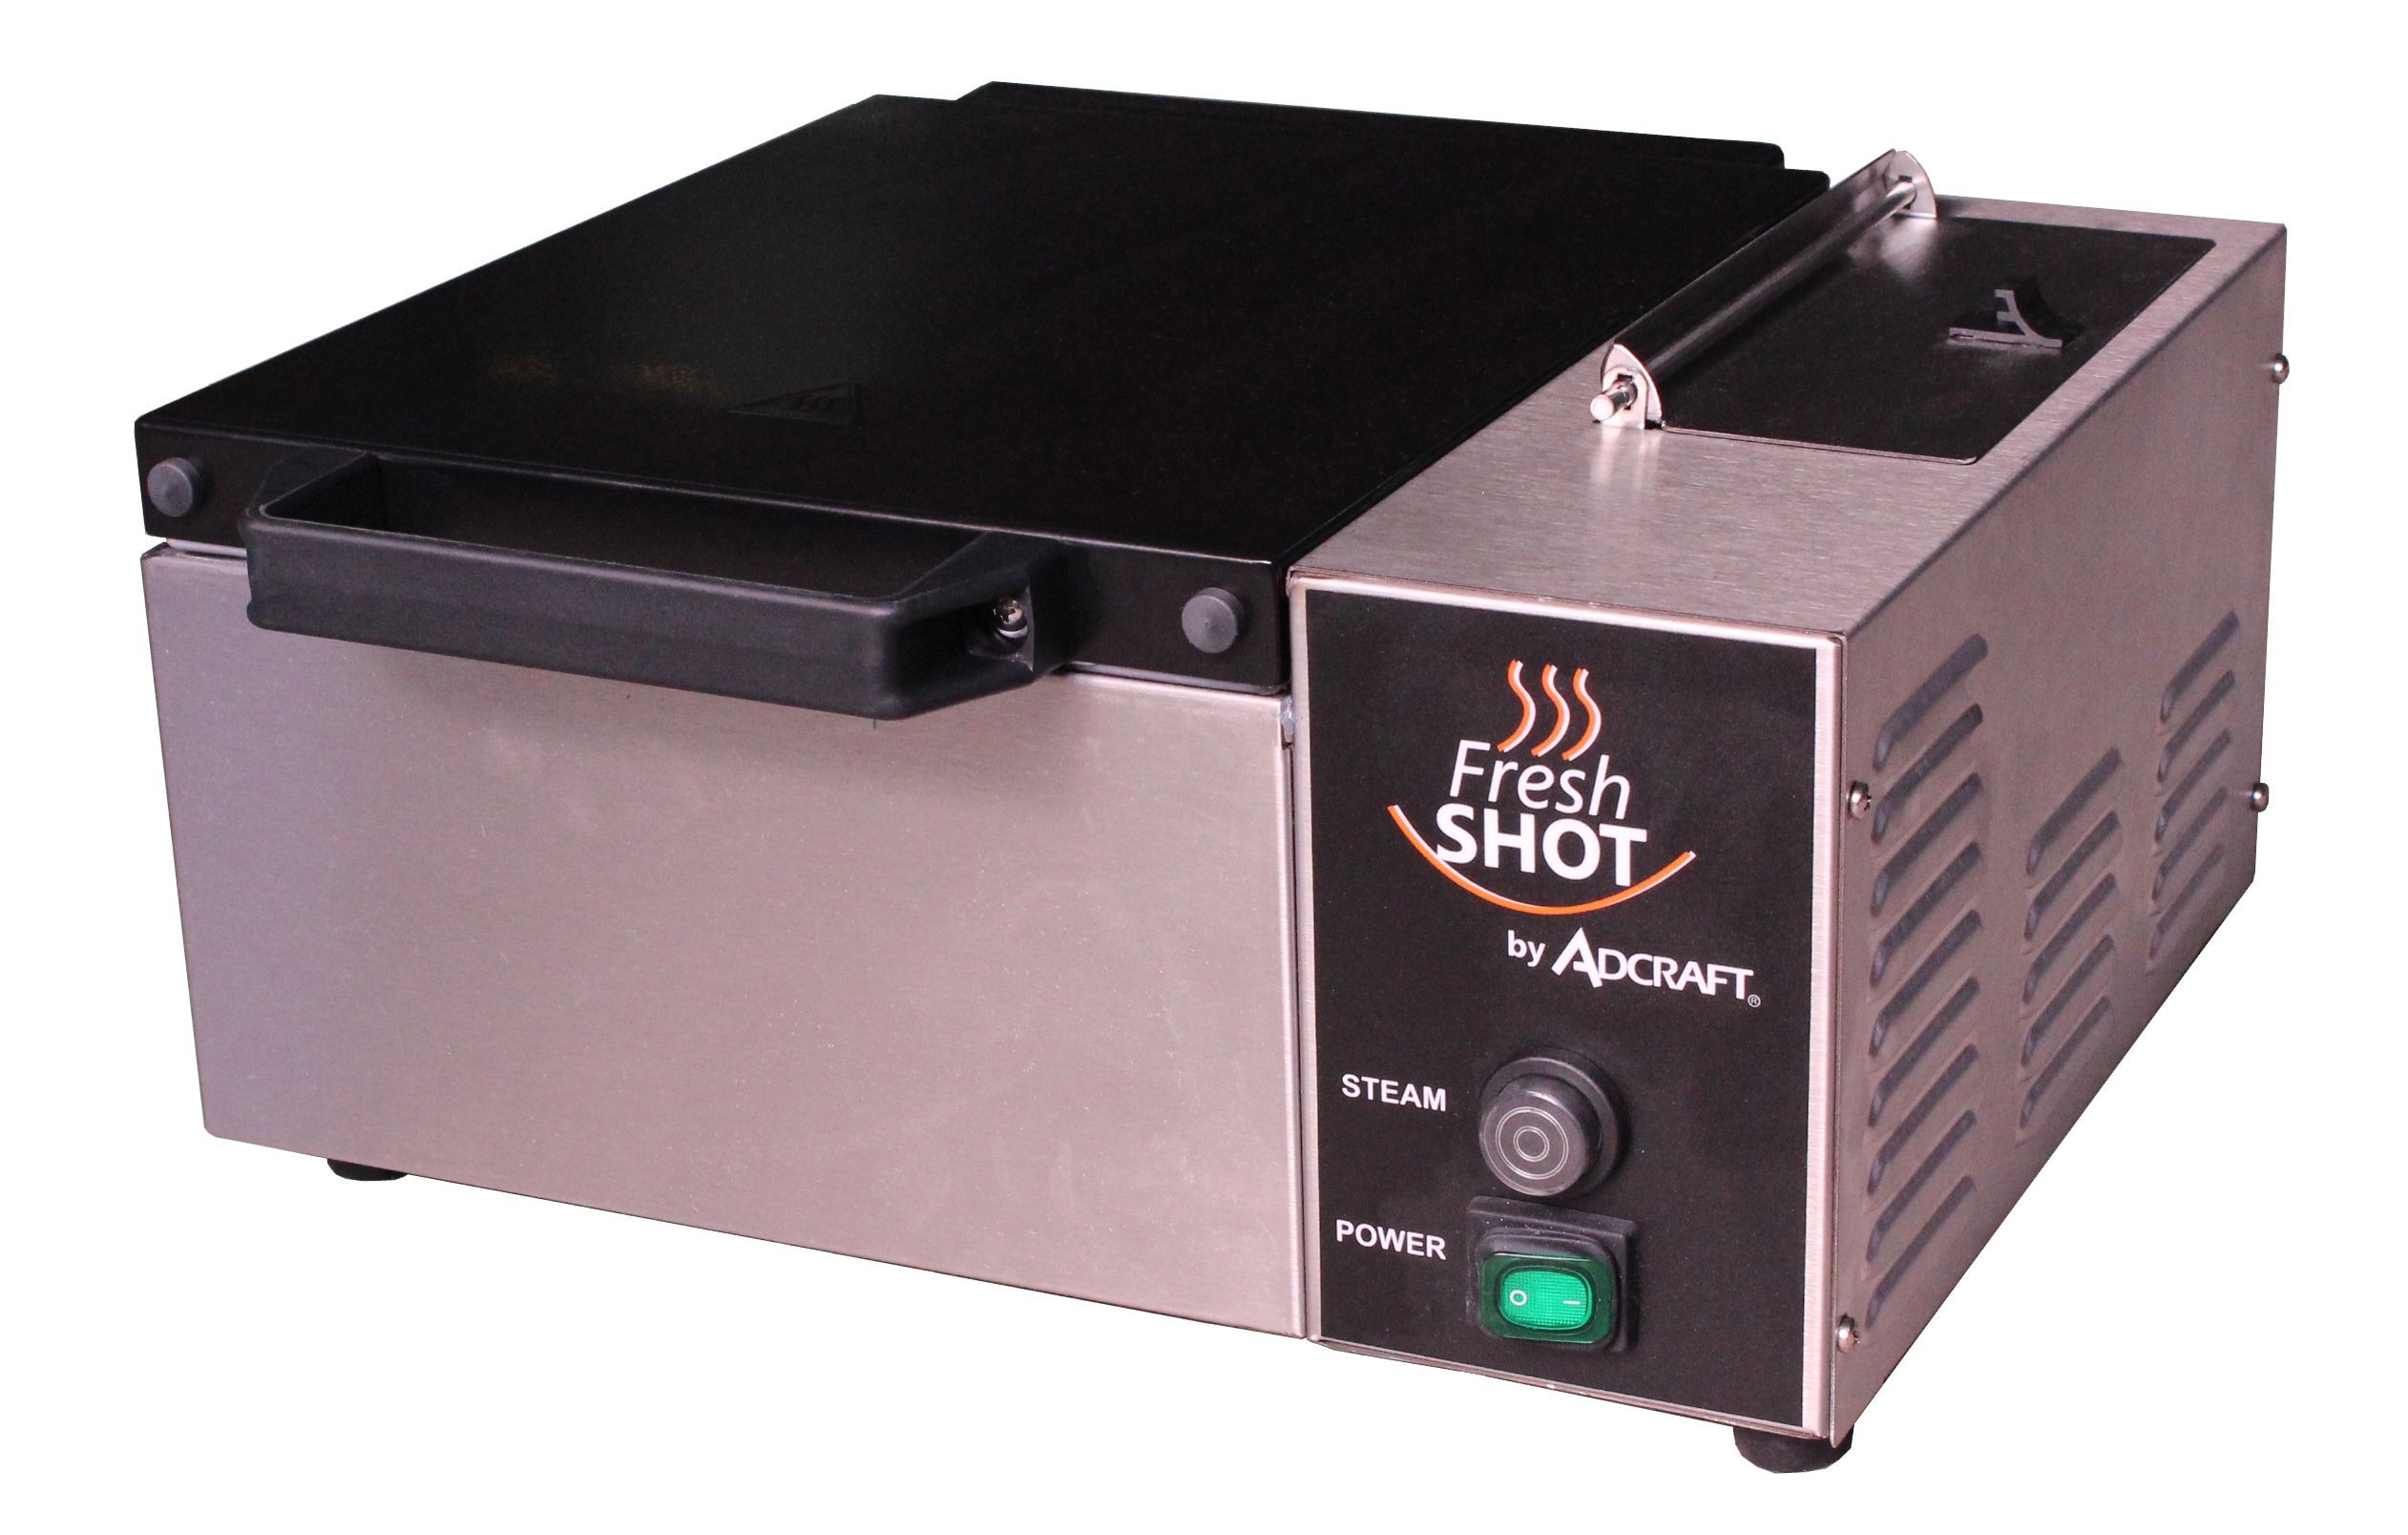 Adcraft CTS-1800W Fresh Shot Countertop Steamer, 120V